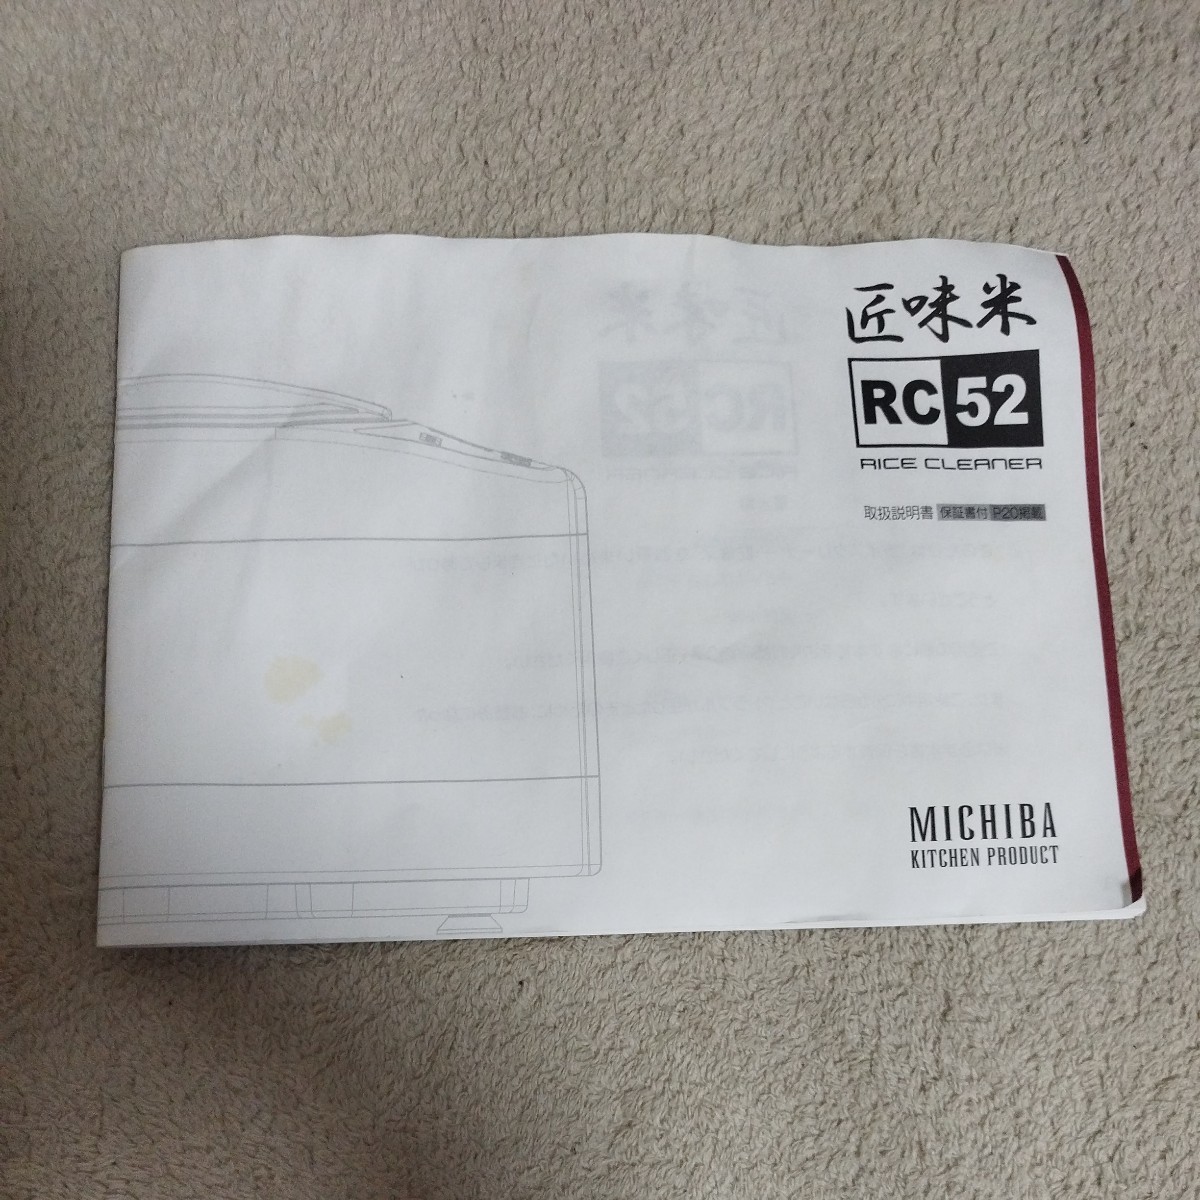 （M）MICHIBA KITCHEN PRODUCT 匠味米 RC52 家庭用精米機 MB-RC52 山本電気_画像5